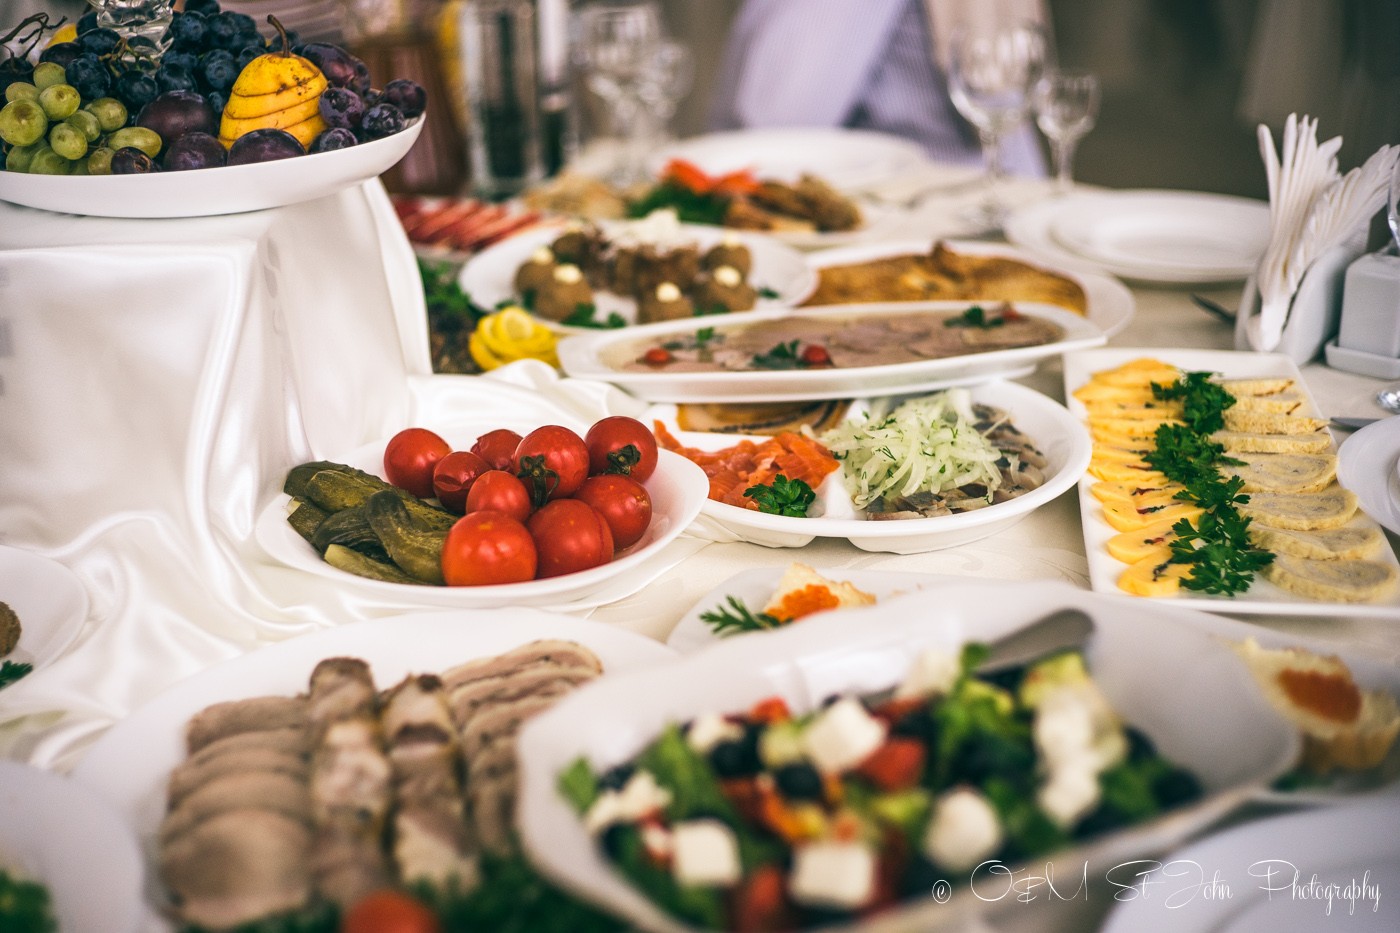 Assortment of food at cousin's wedding in Ukraine